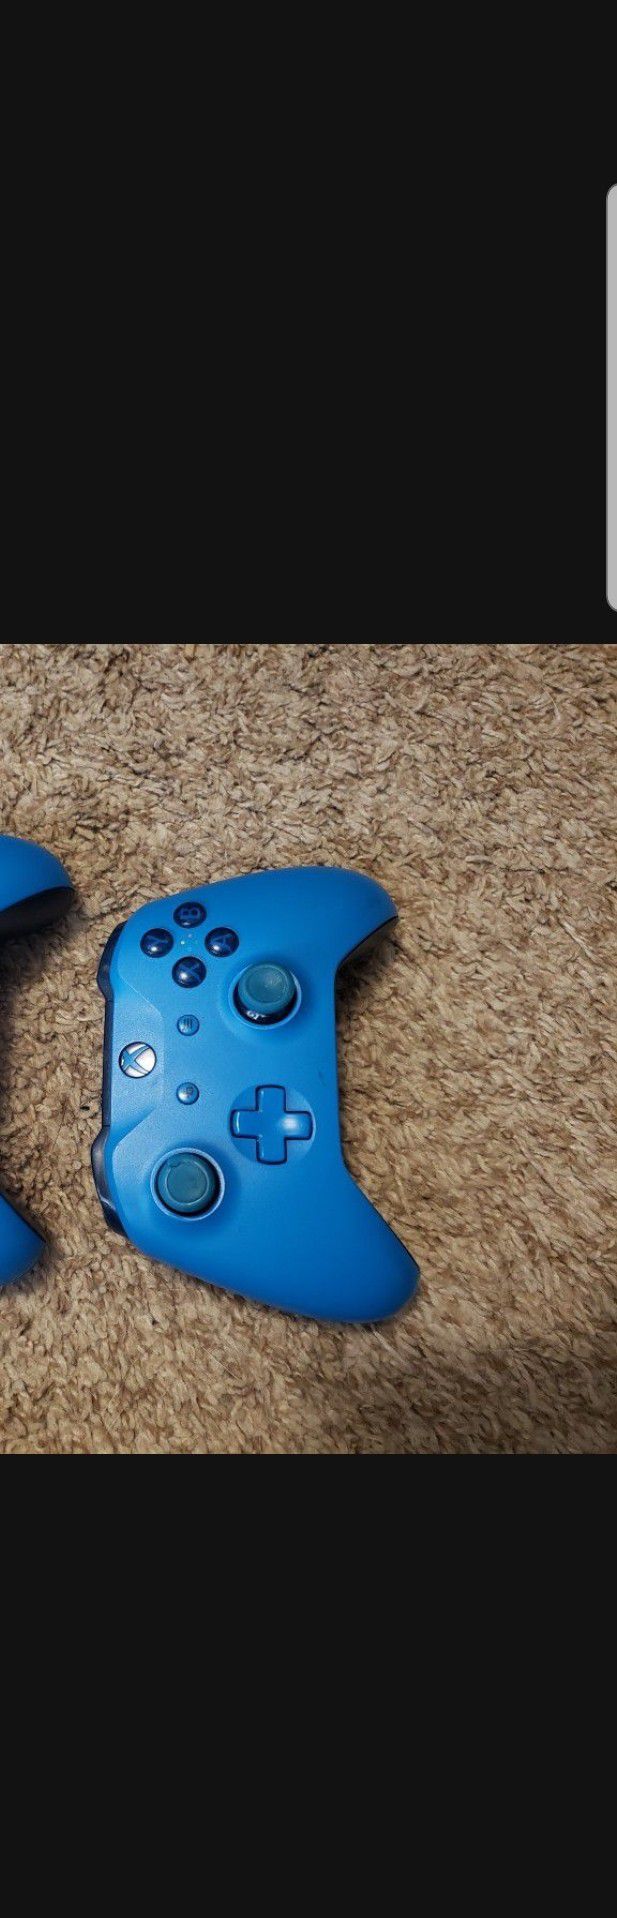 Xbox one controller xbox one blue controller